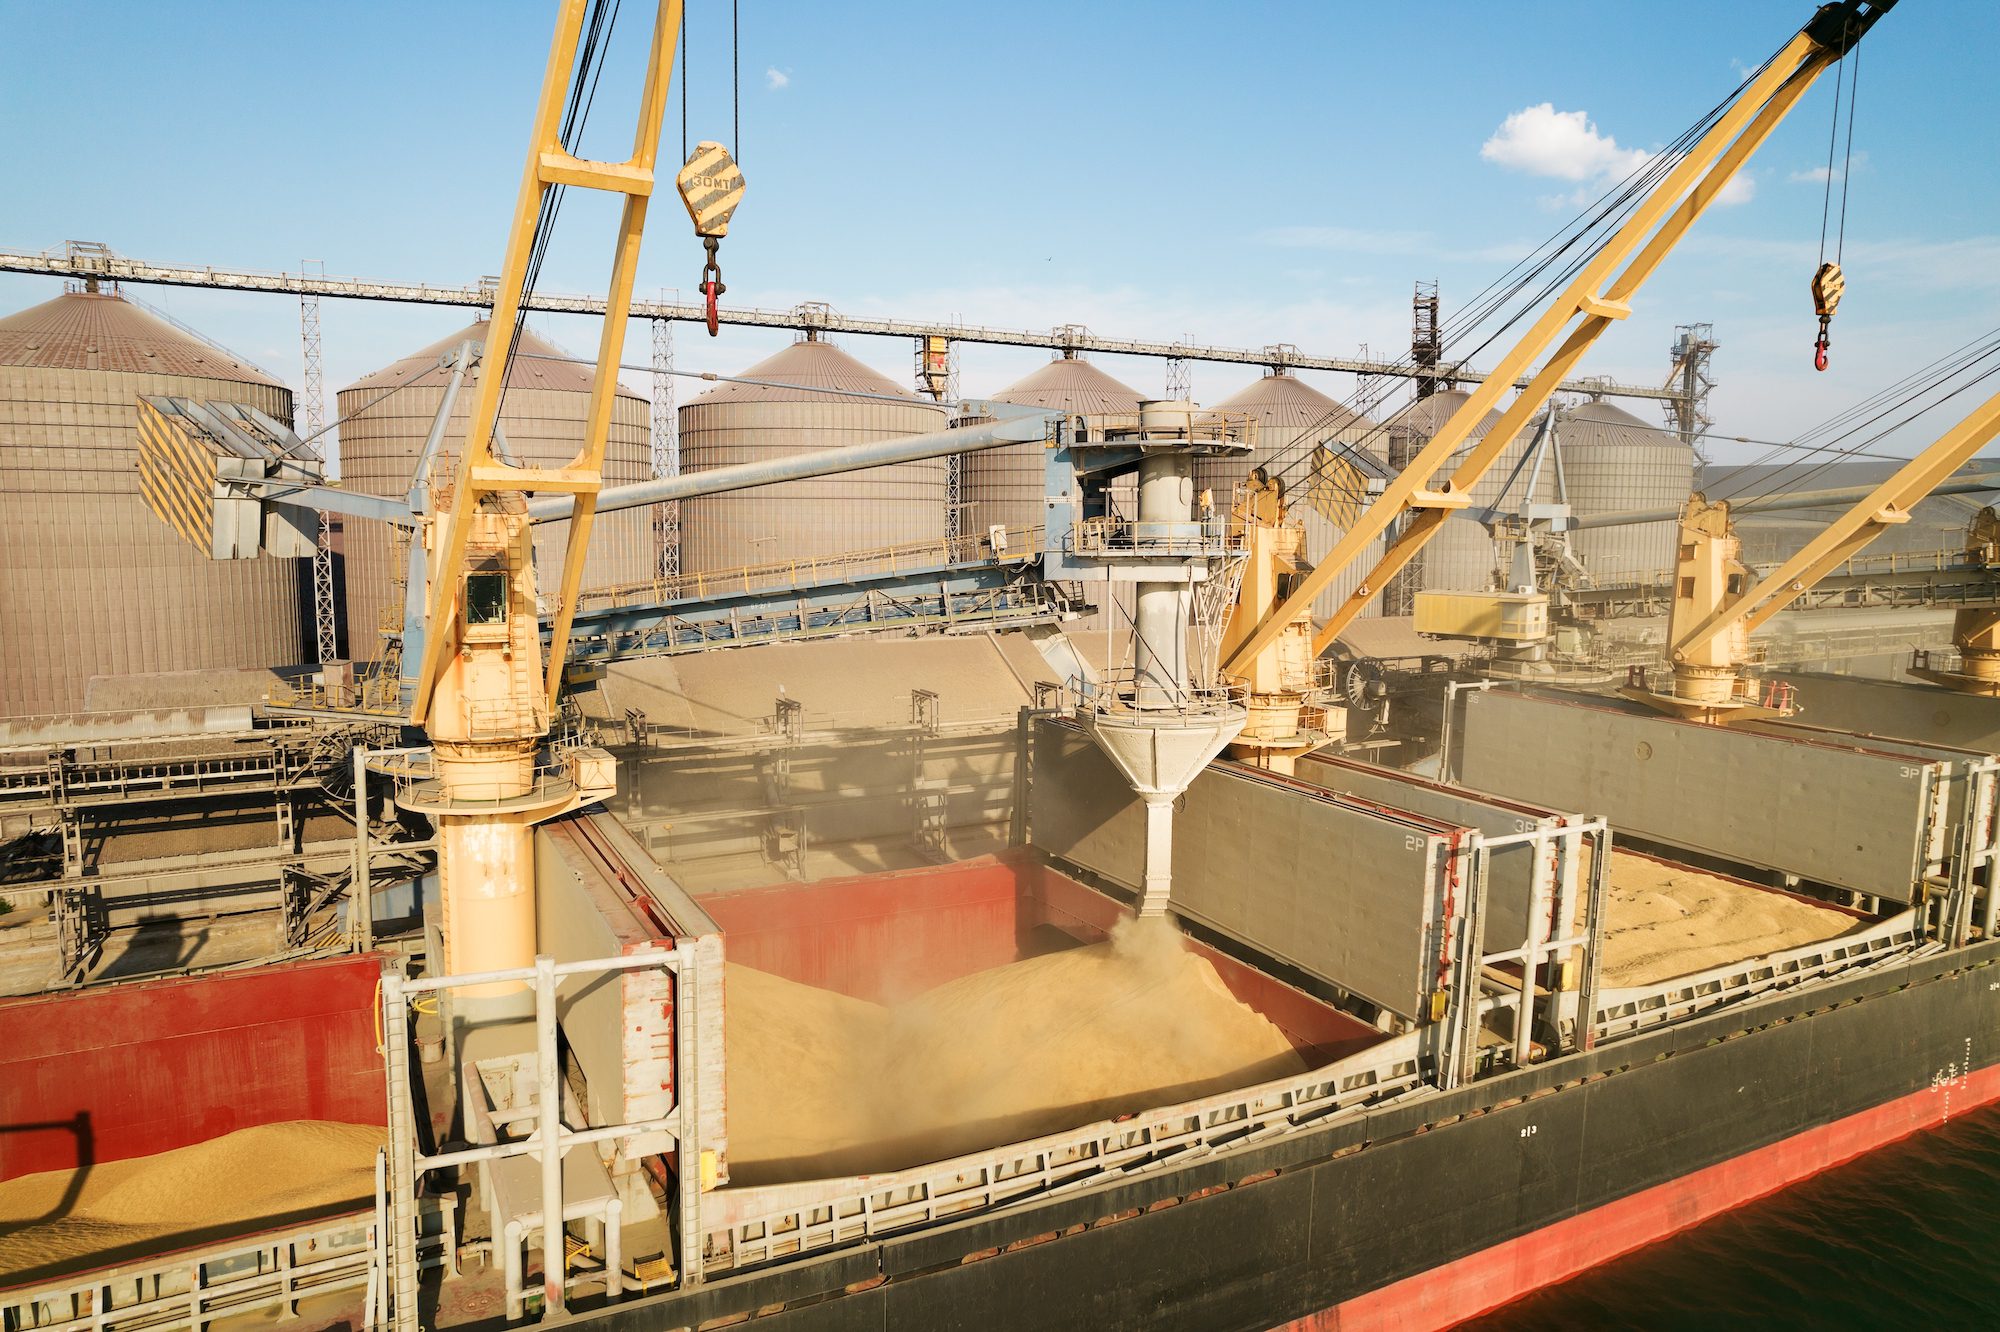 Grain is loaded onto a ship in Odessa, Ukraine, August 9, 2021